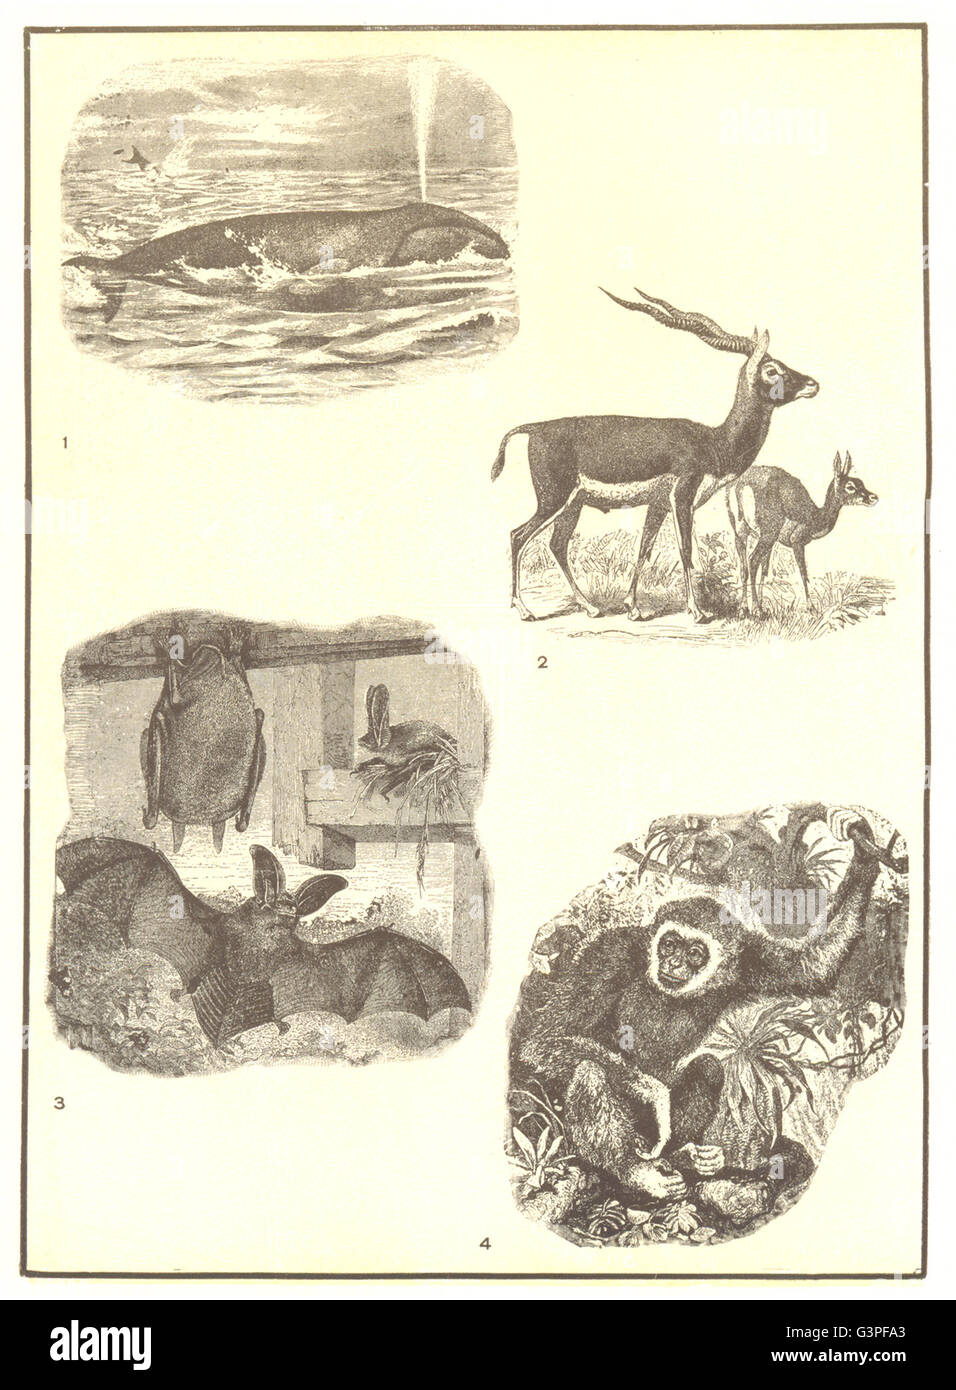 MAMMAL: Whale-aquatic; Antelope-terrestrial; Bat-aerial; Ape-arboreal, 1907 Stock Photo